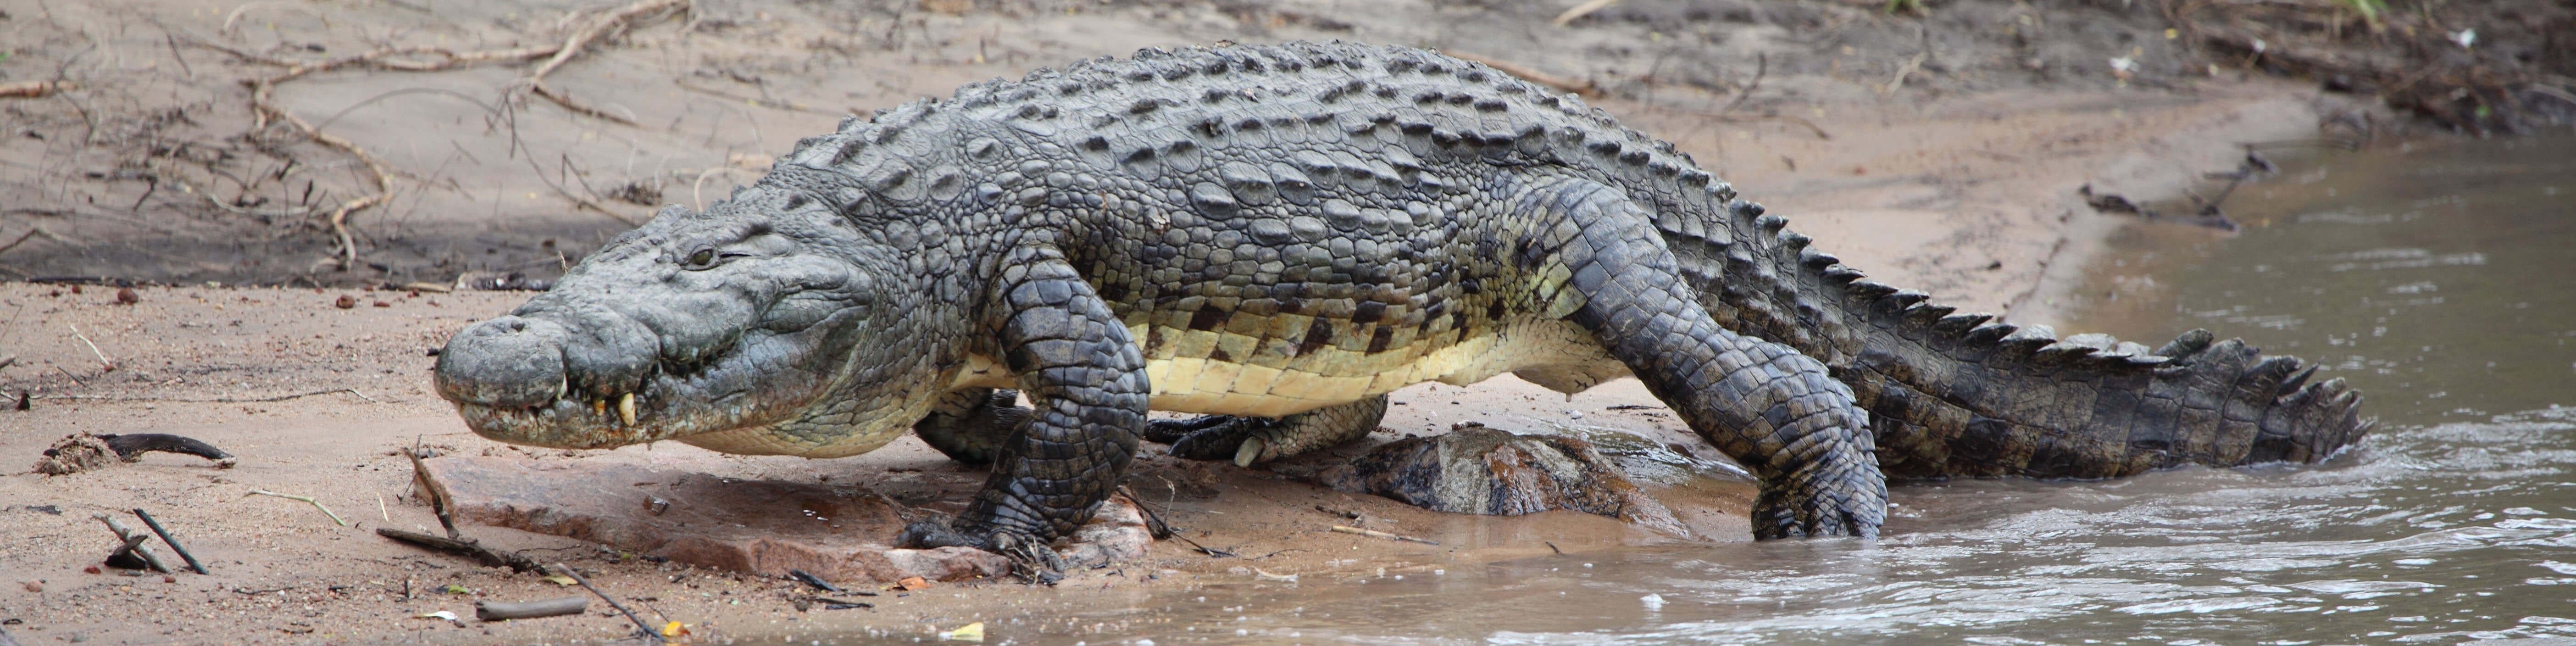 Nile crocodile in Tanzania, one of the dangerous 7 animals